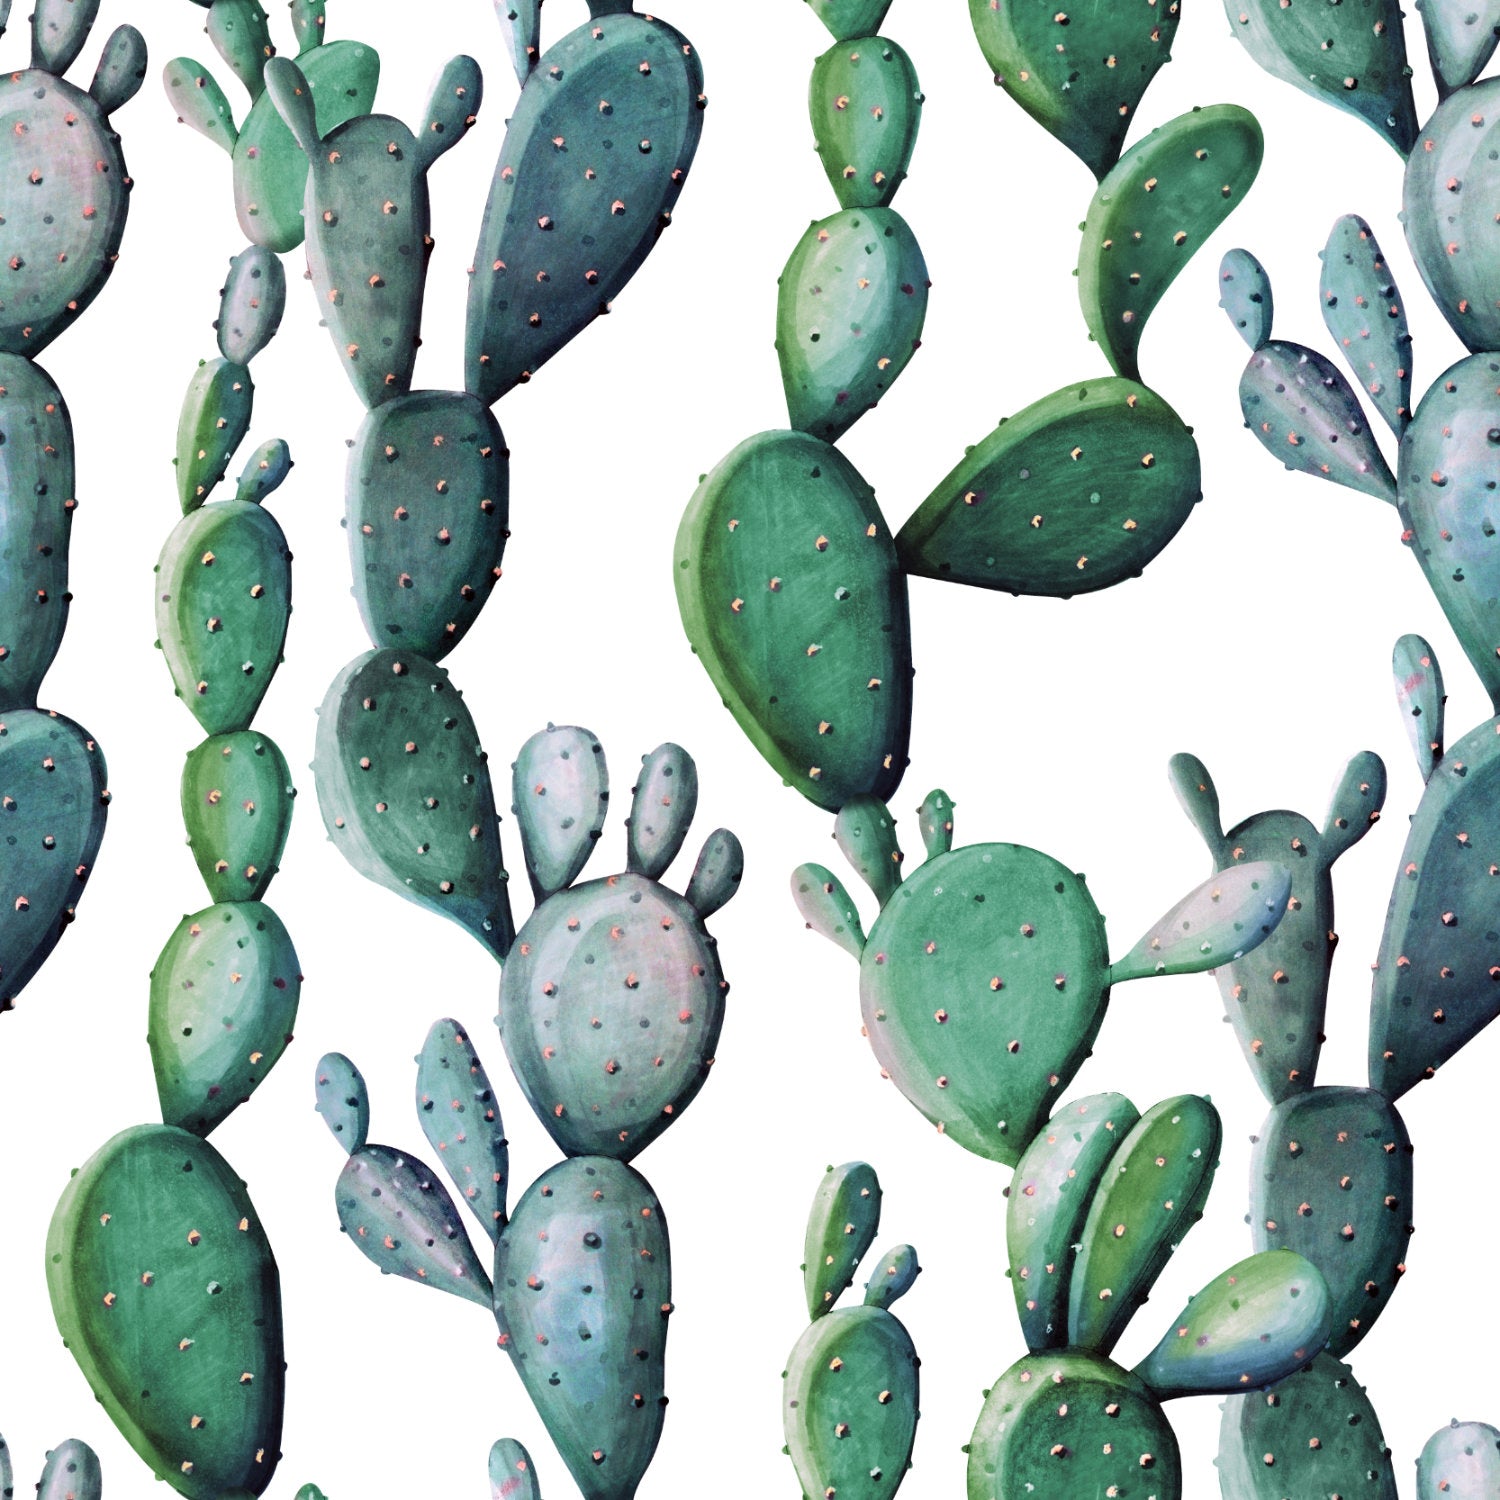 Argot wallpaper mural it has cactus in Two shades of Green | WallpaperMural.com